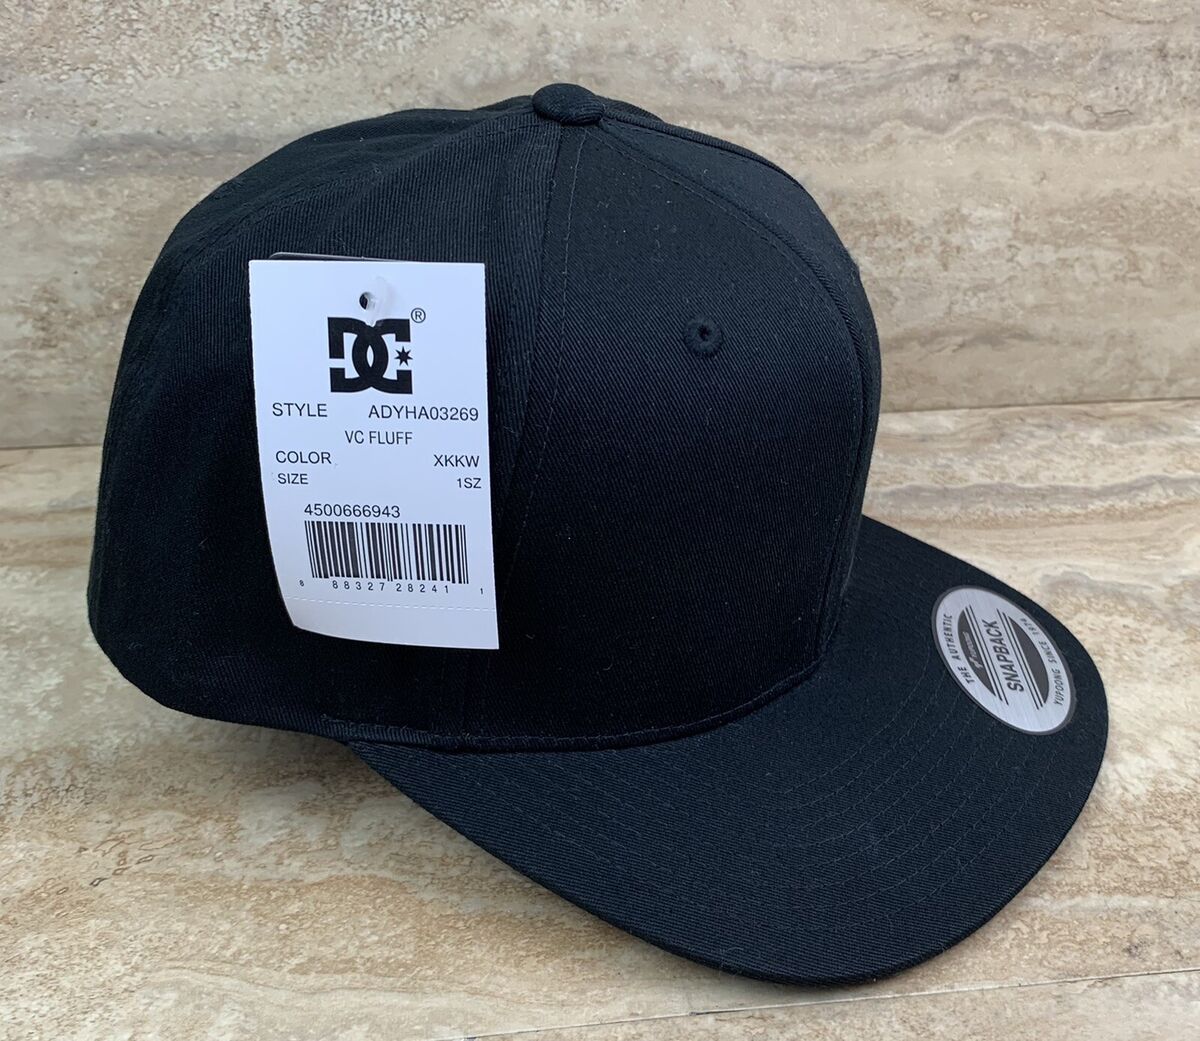 Hat | SHOES Black Apparel Adjustable DC Snapback White Sports Skate Cap eBay